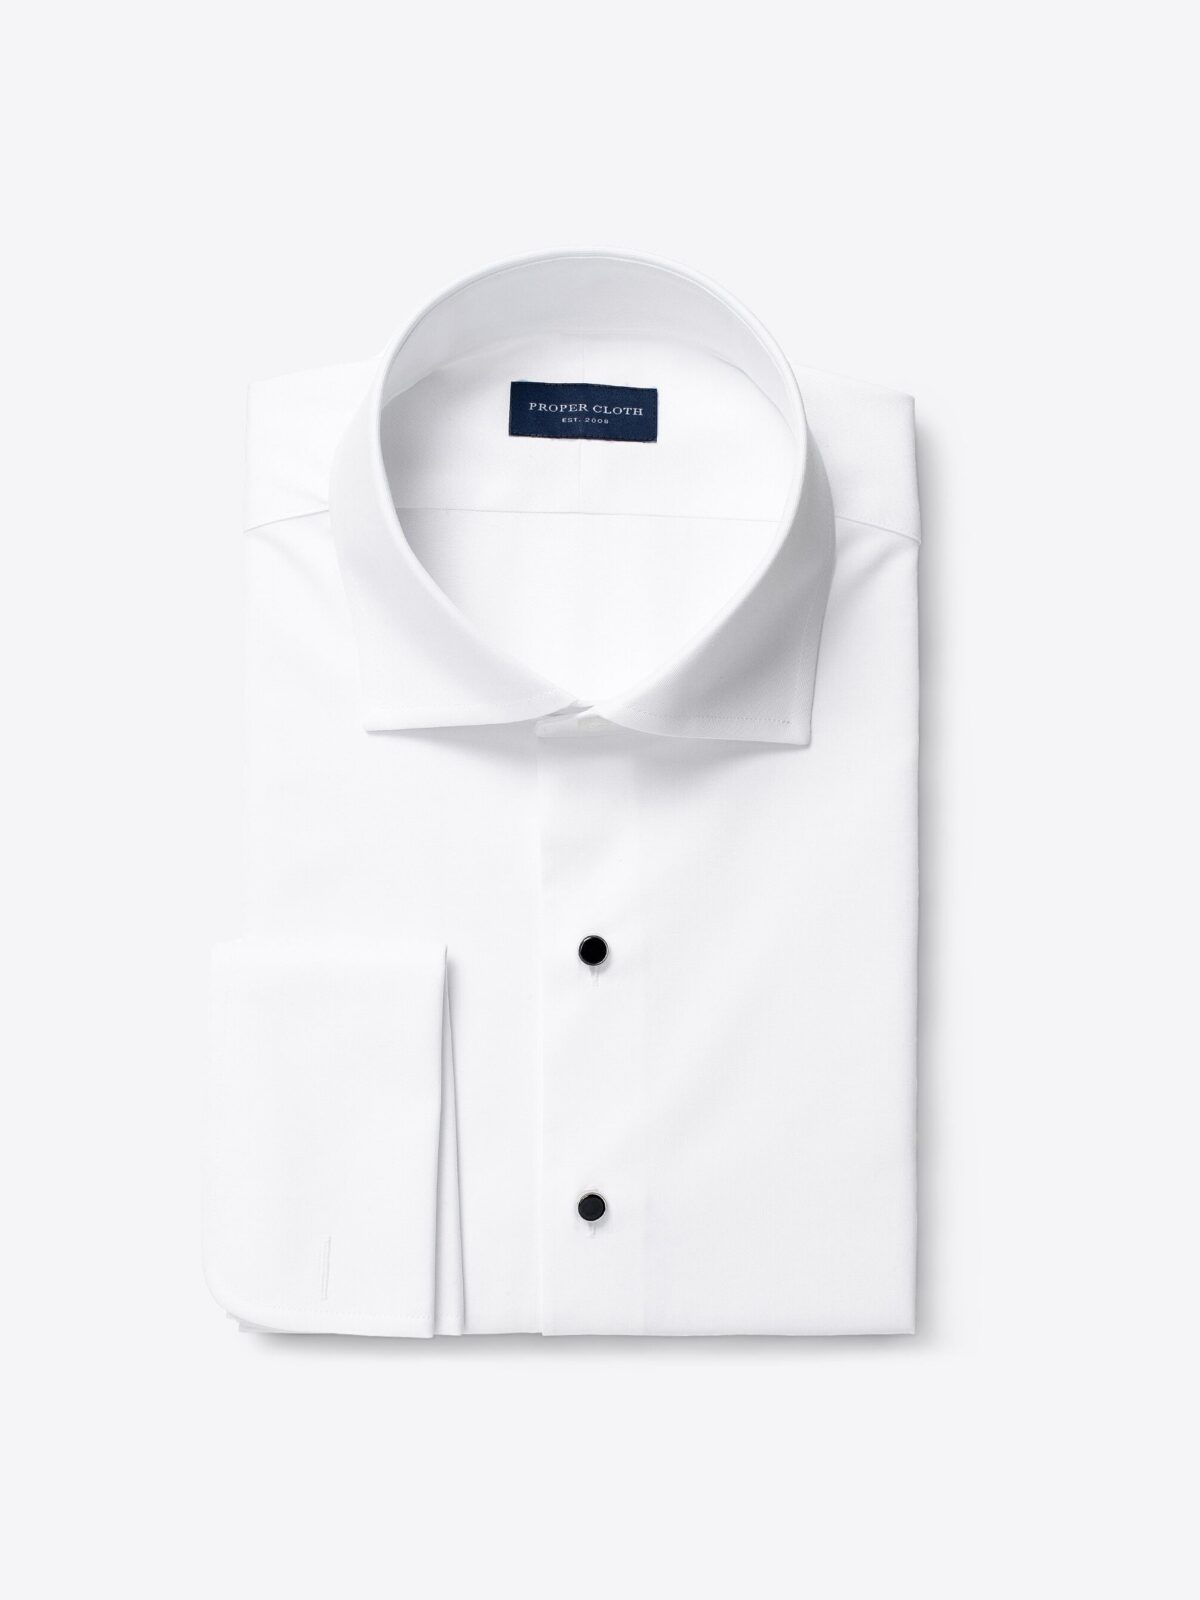 Thomas Mason Goldline White Fine Twill Shirt by Proper Cloth